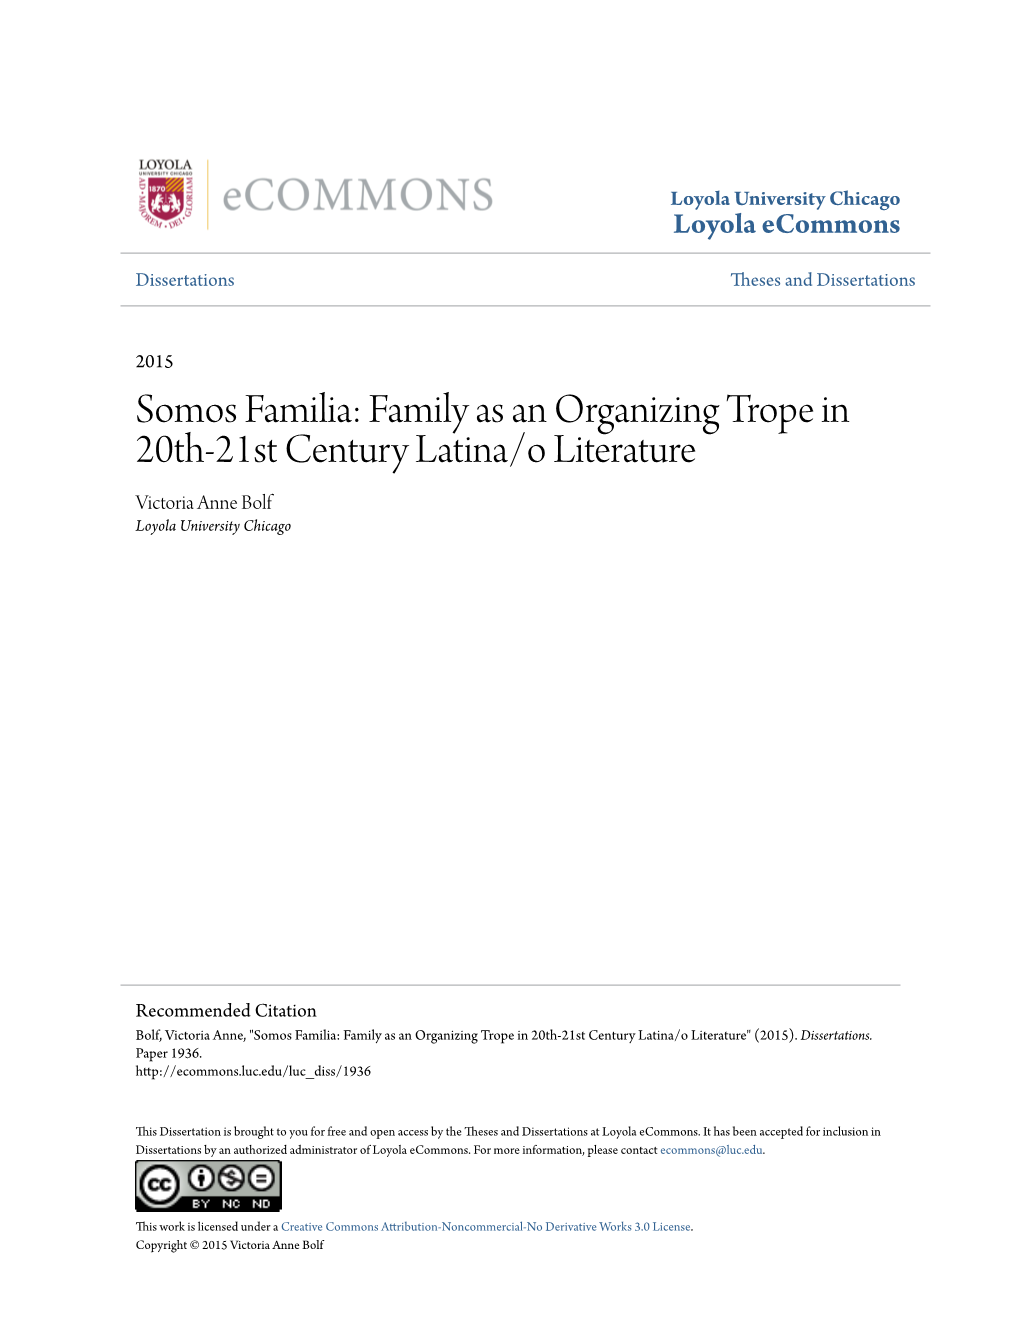 Somos Familia: Family As an Organizing Trope in 20Th-21St Century Latina/O Literature Victoria Anne Bolf Loyola University Chicago